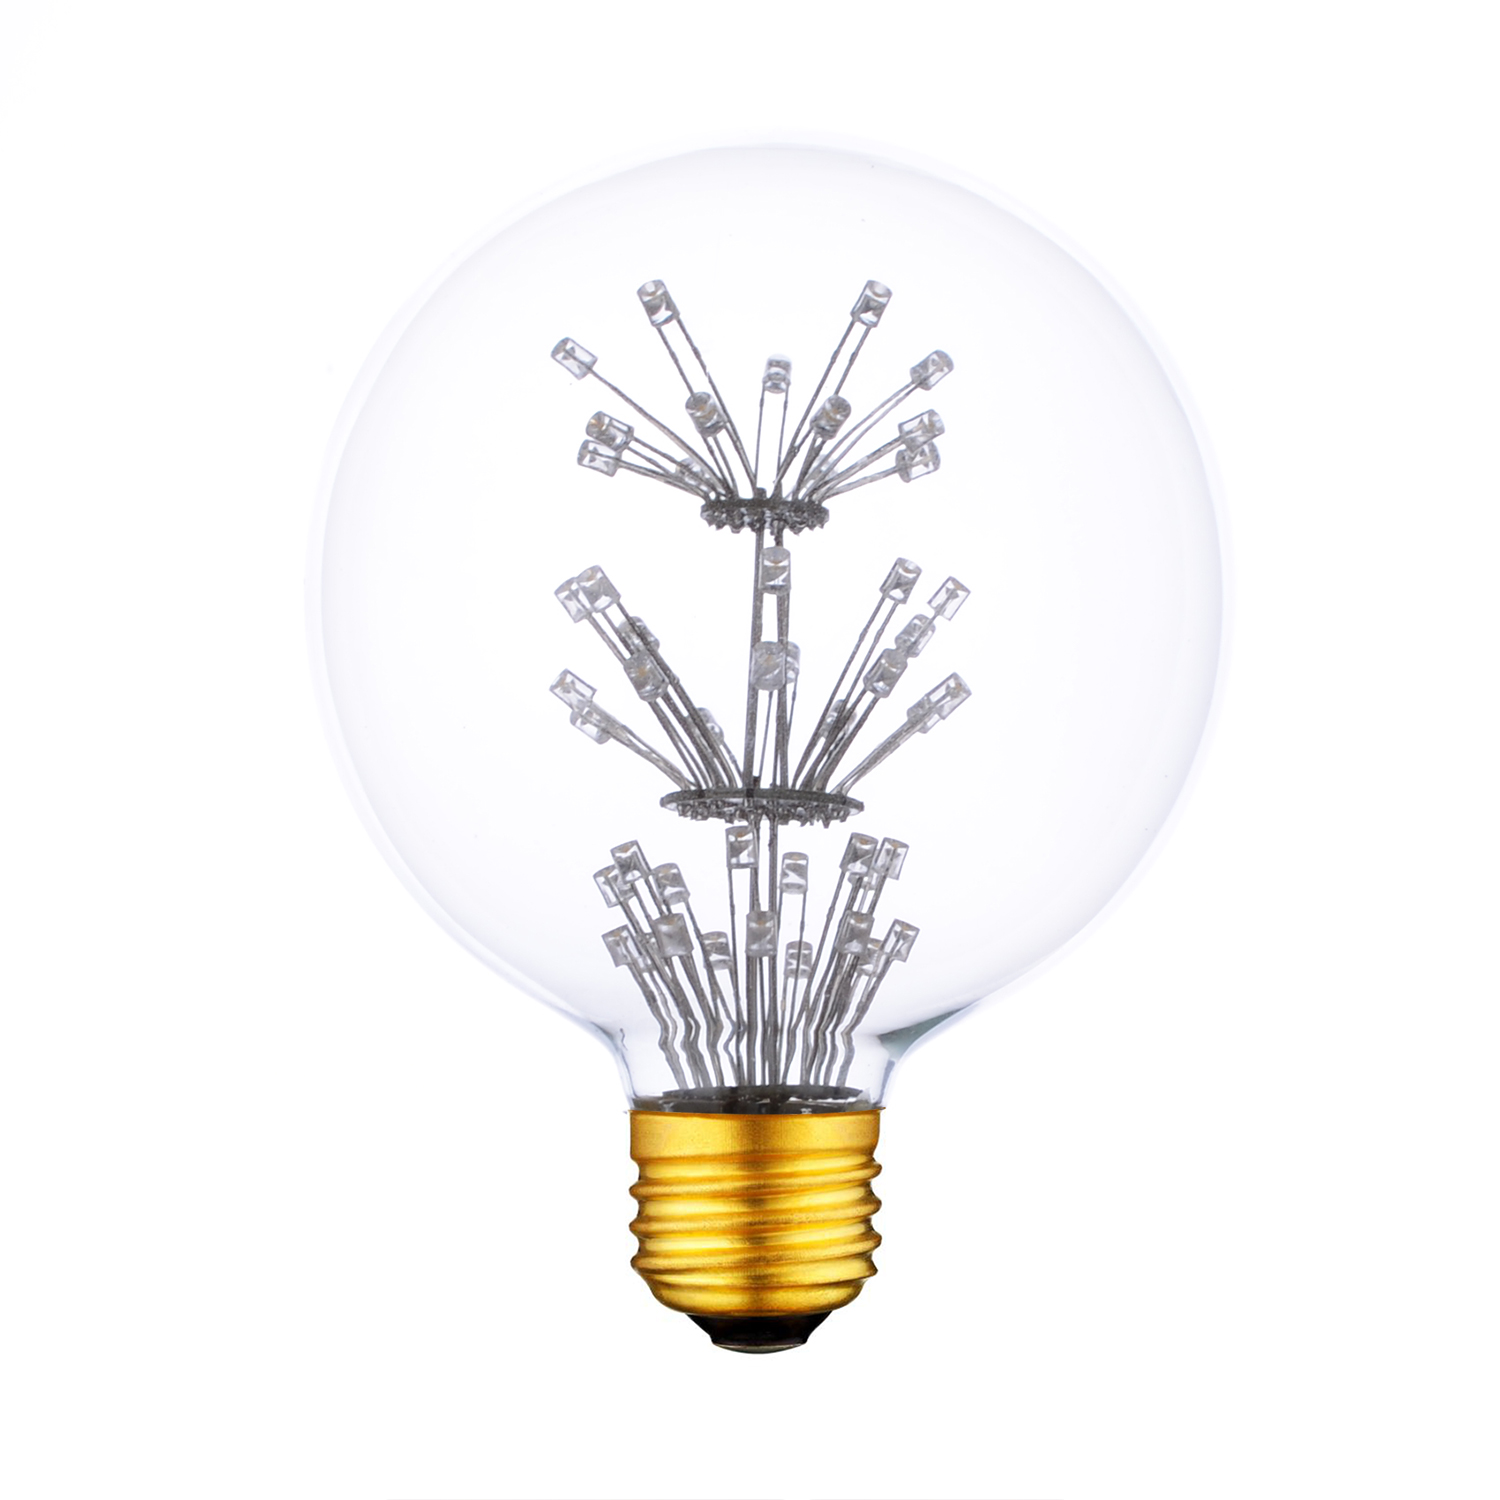 G80 Edison LED Decorative Antique Style Light Bulb